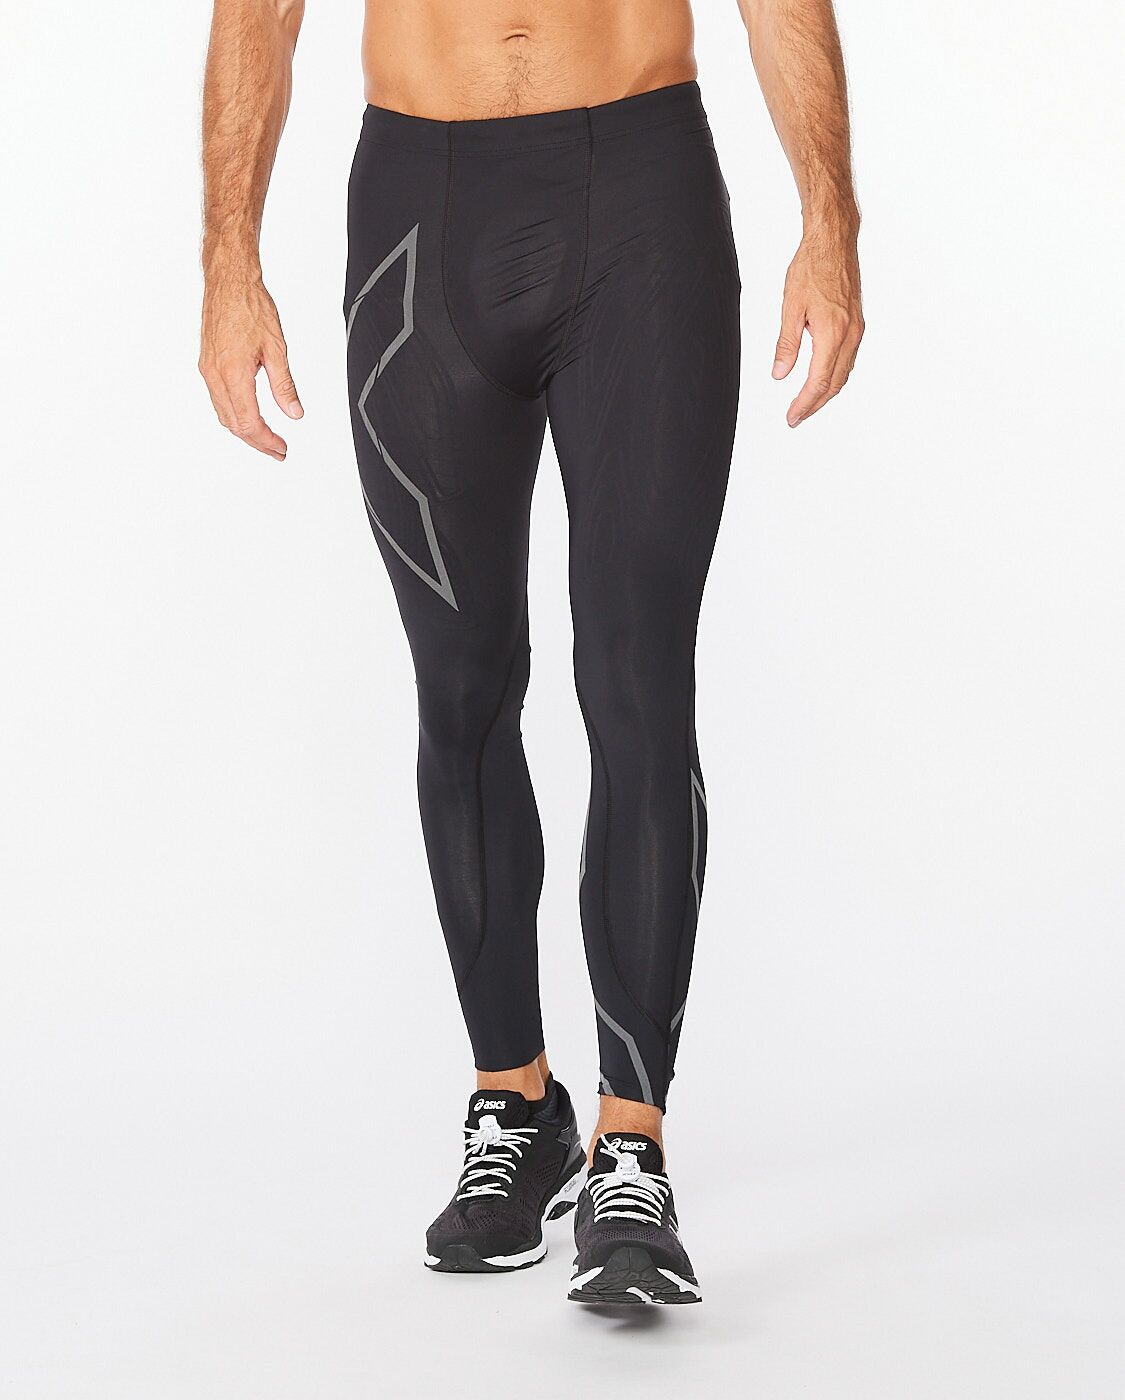 BG3000 Mid Tight - Black, Running leggings men